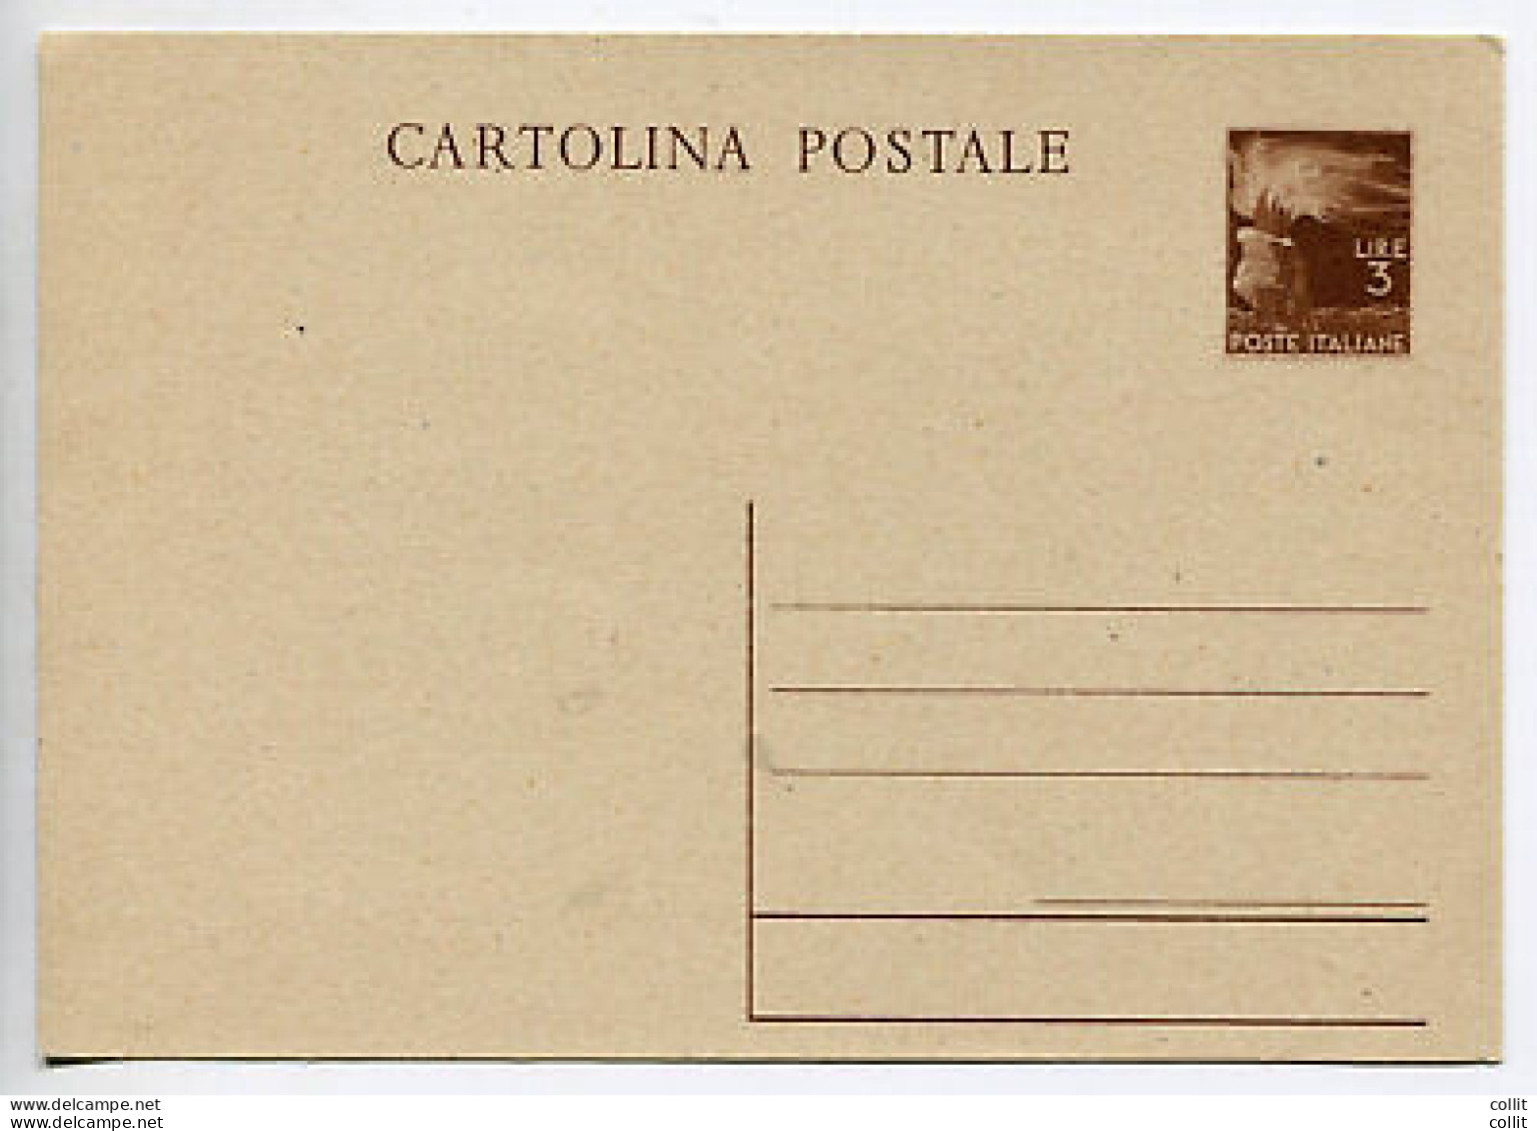 Cartolina Postale L. 3 Democratica - Stamped Stationery